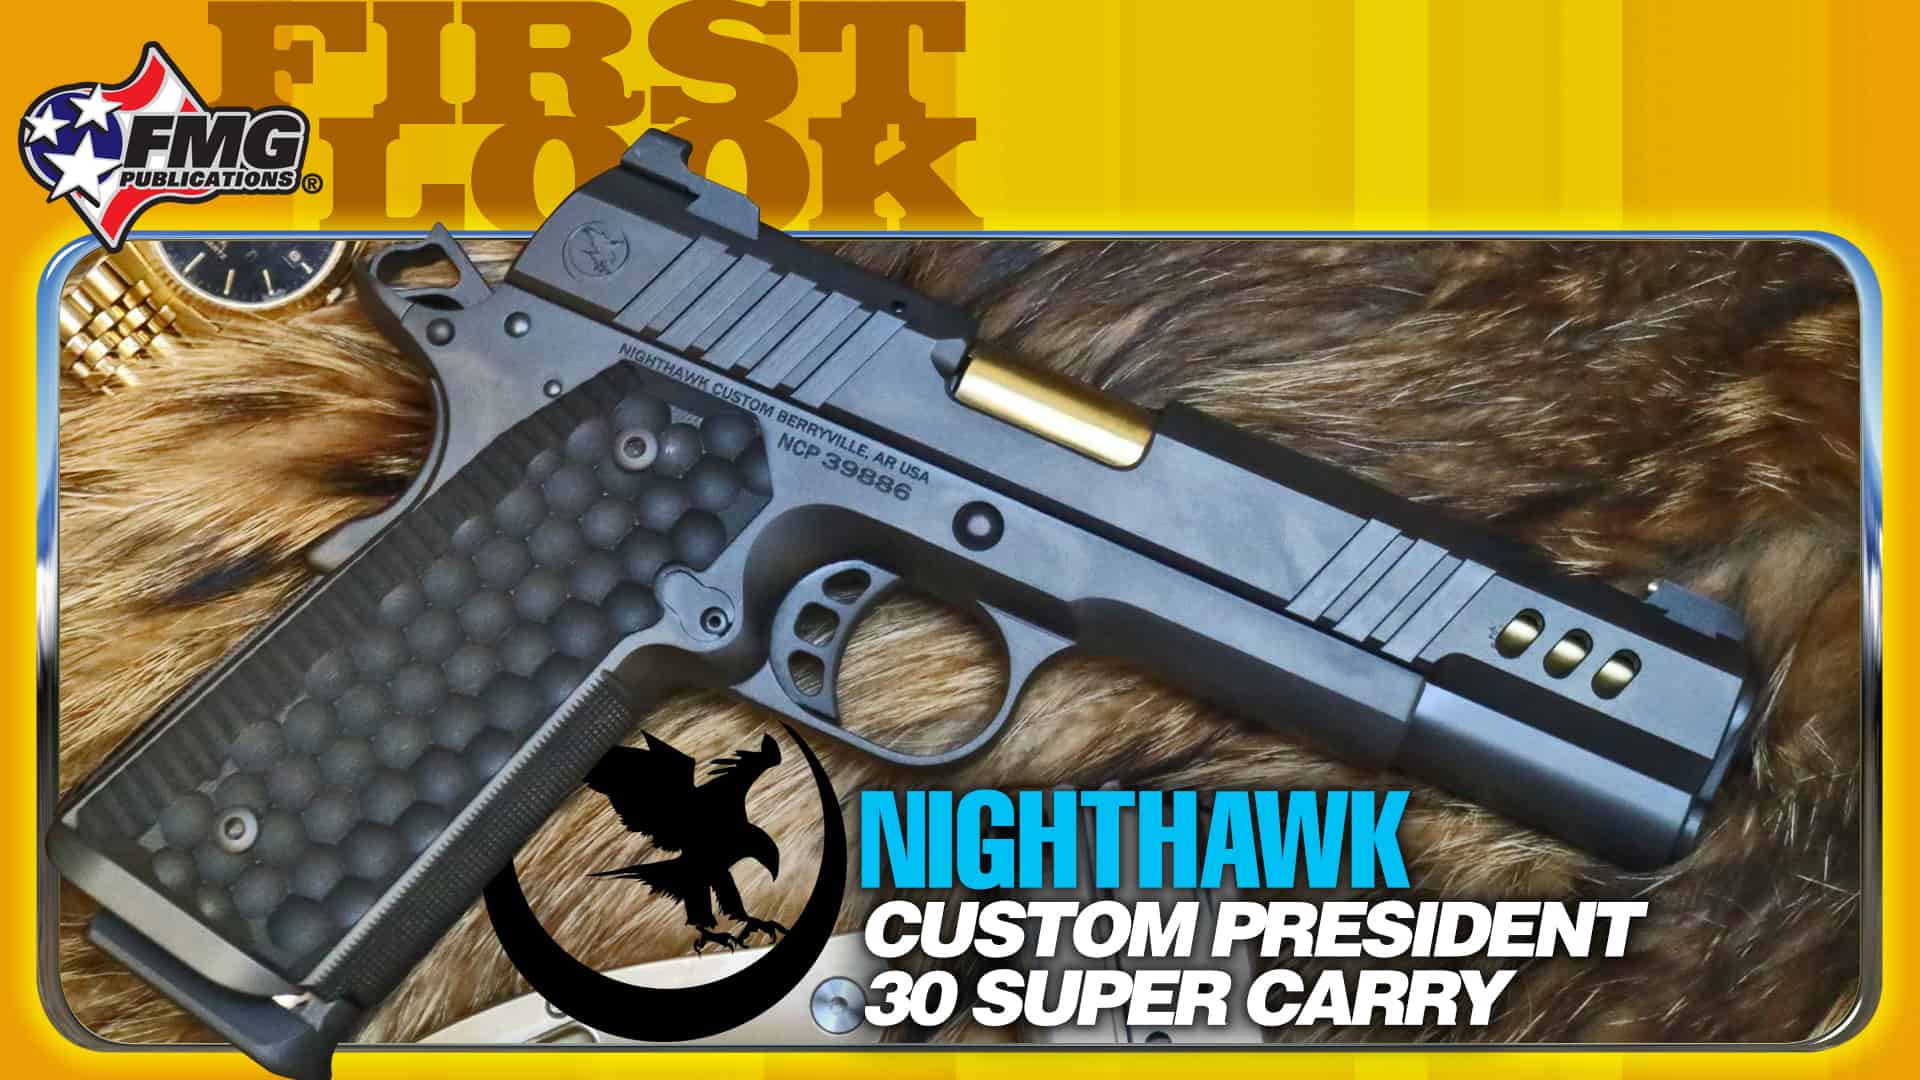 nighthawk president in 30 super carry